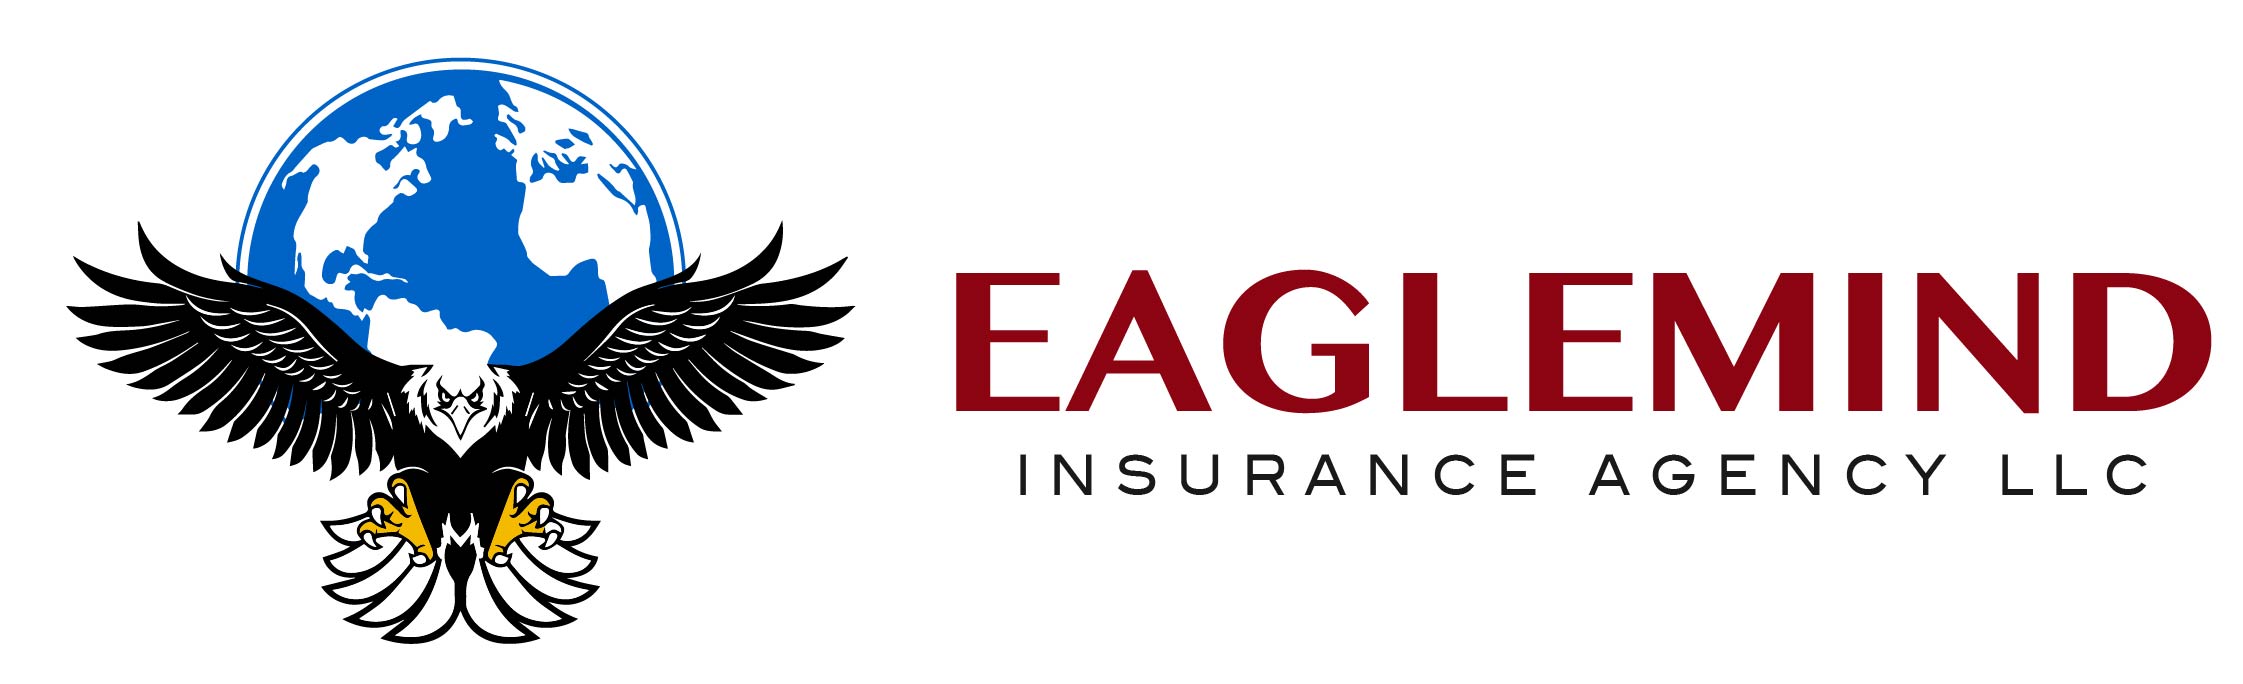 Eaglemind insurrance company